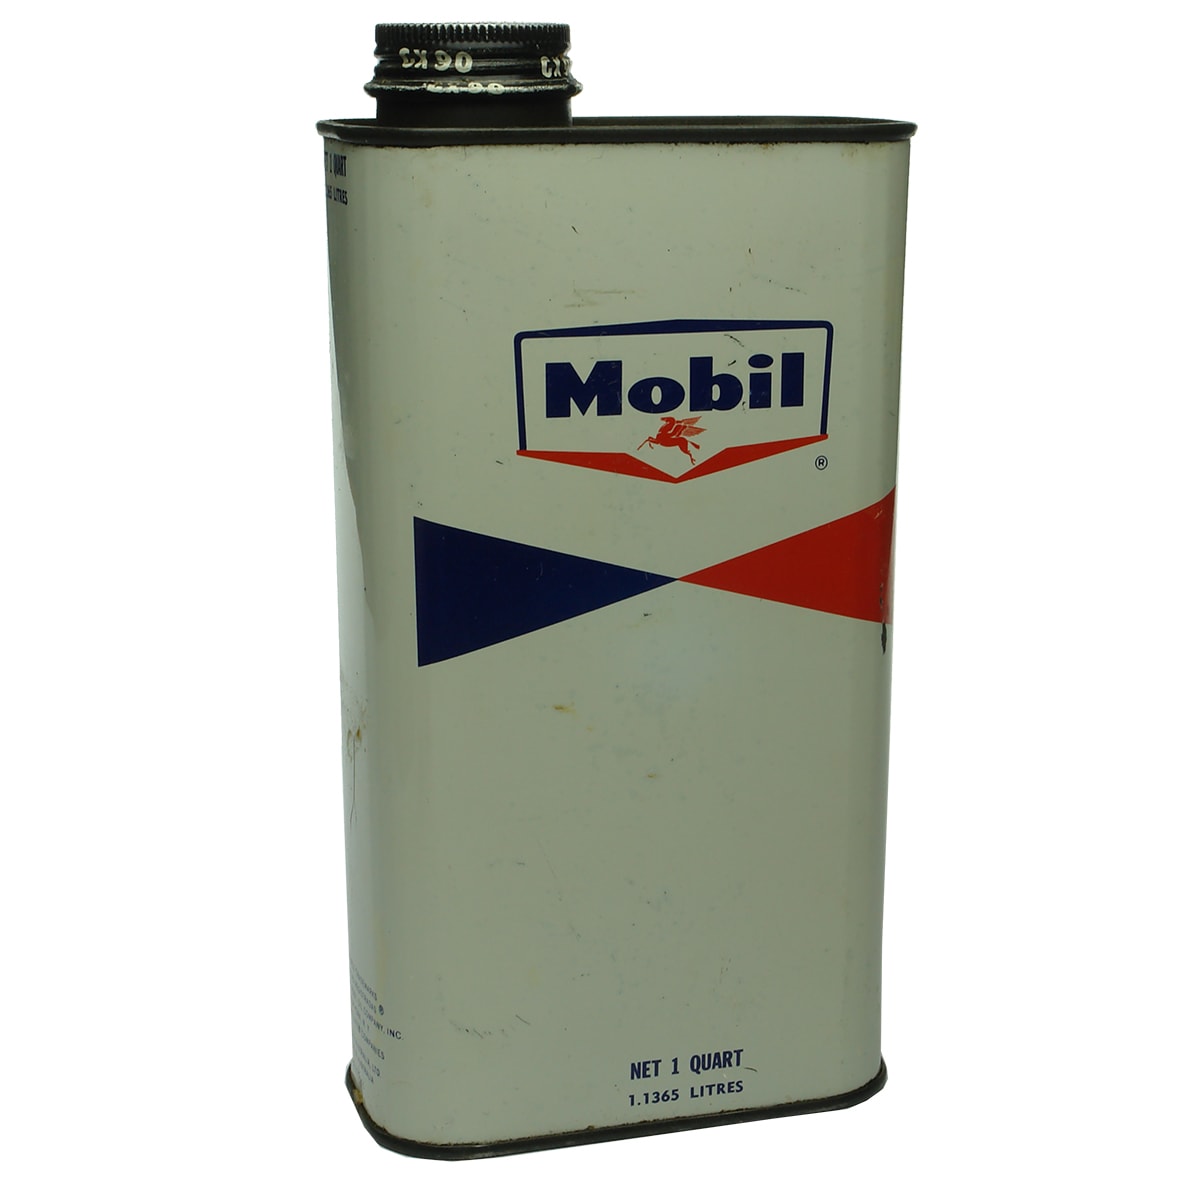 Oil Tin. Mobil. 1 Quart / 1.1365 Litres. Cap for GX 90 Hypoid Gear Oil.